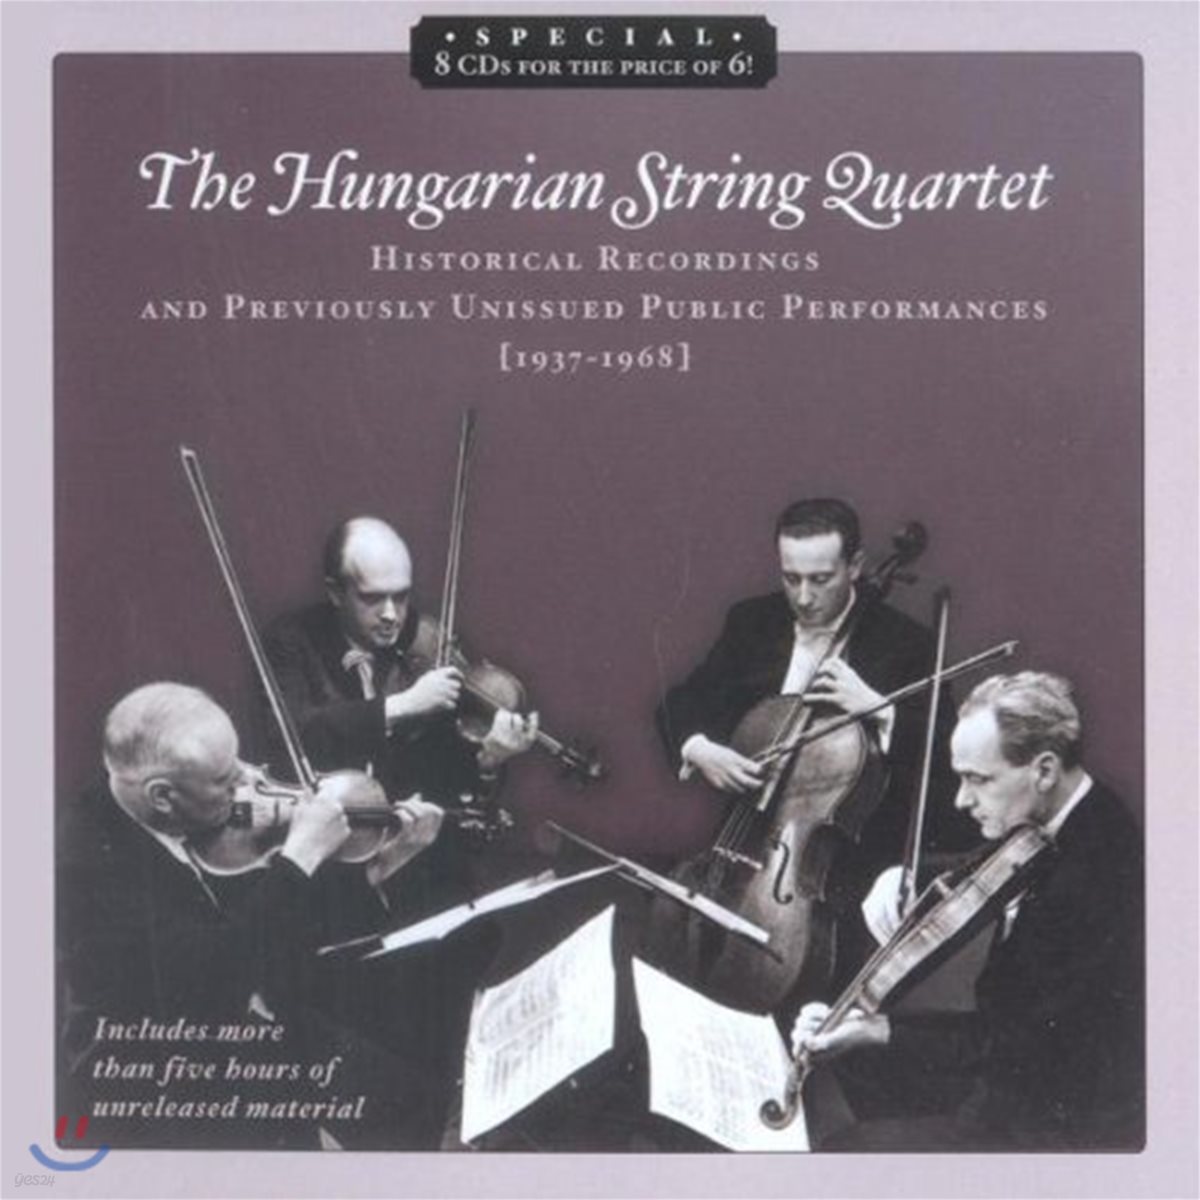 Hungarian String Quartet 헝가리 사중주단 미발매 레코딩 (The Hungarian String Quartet Historical Recordings) [8CD Boxset]